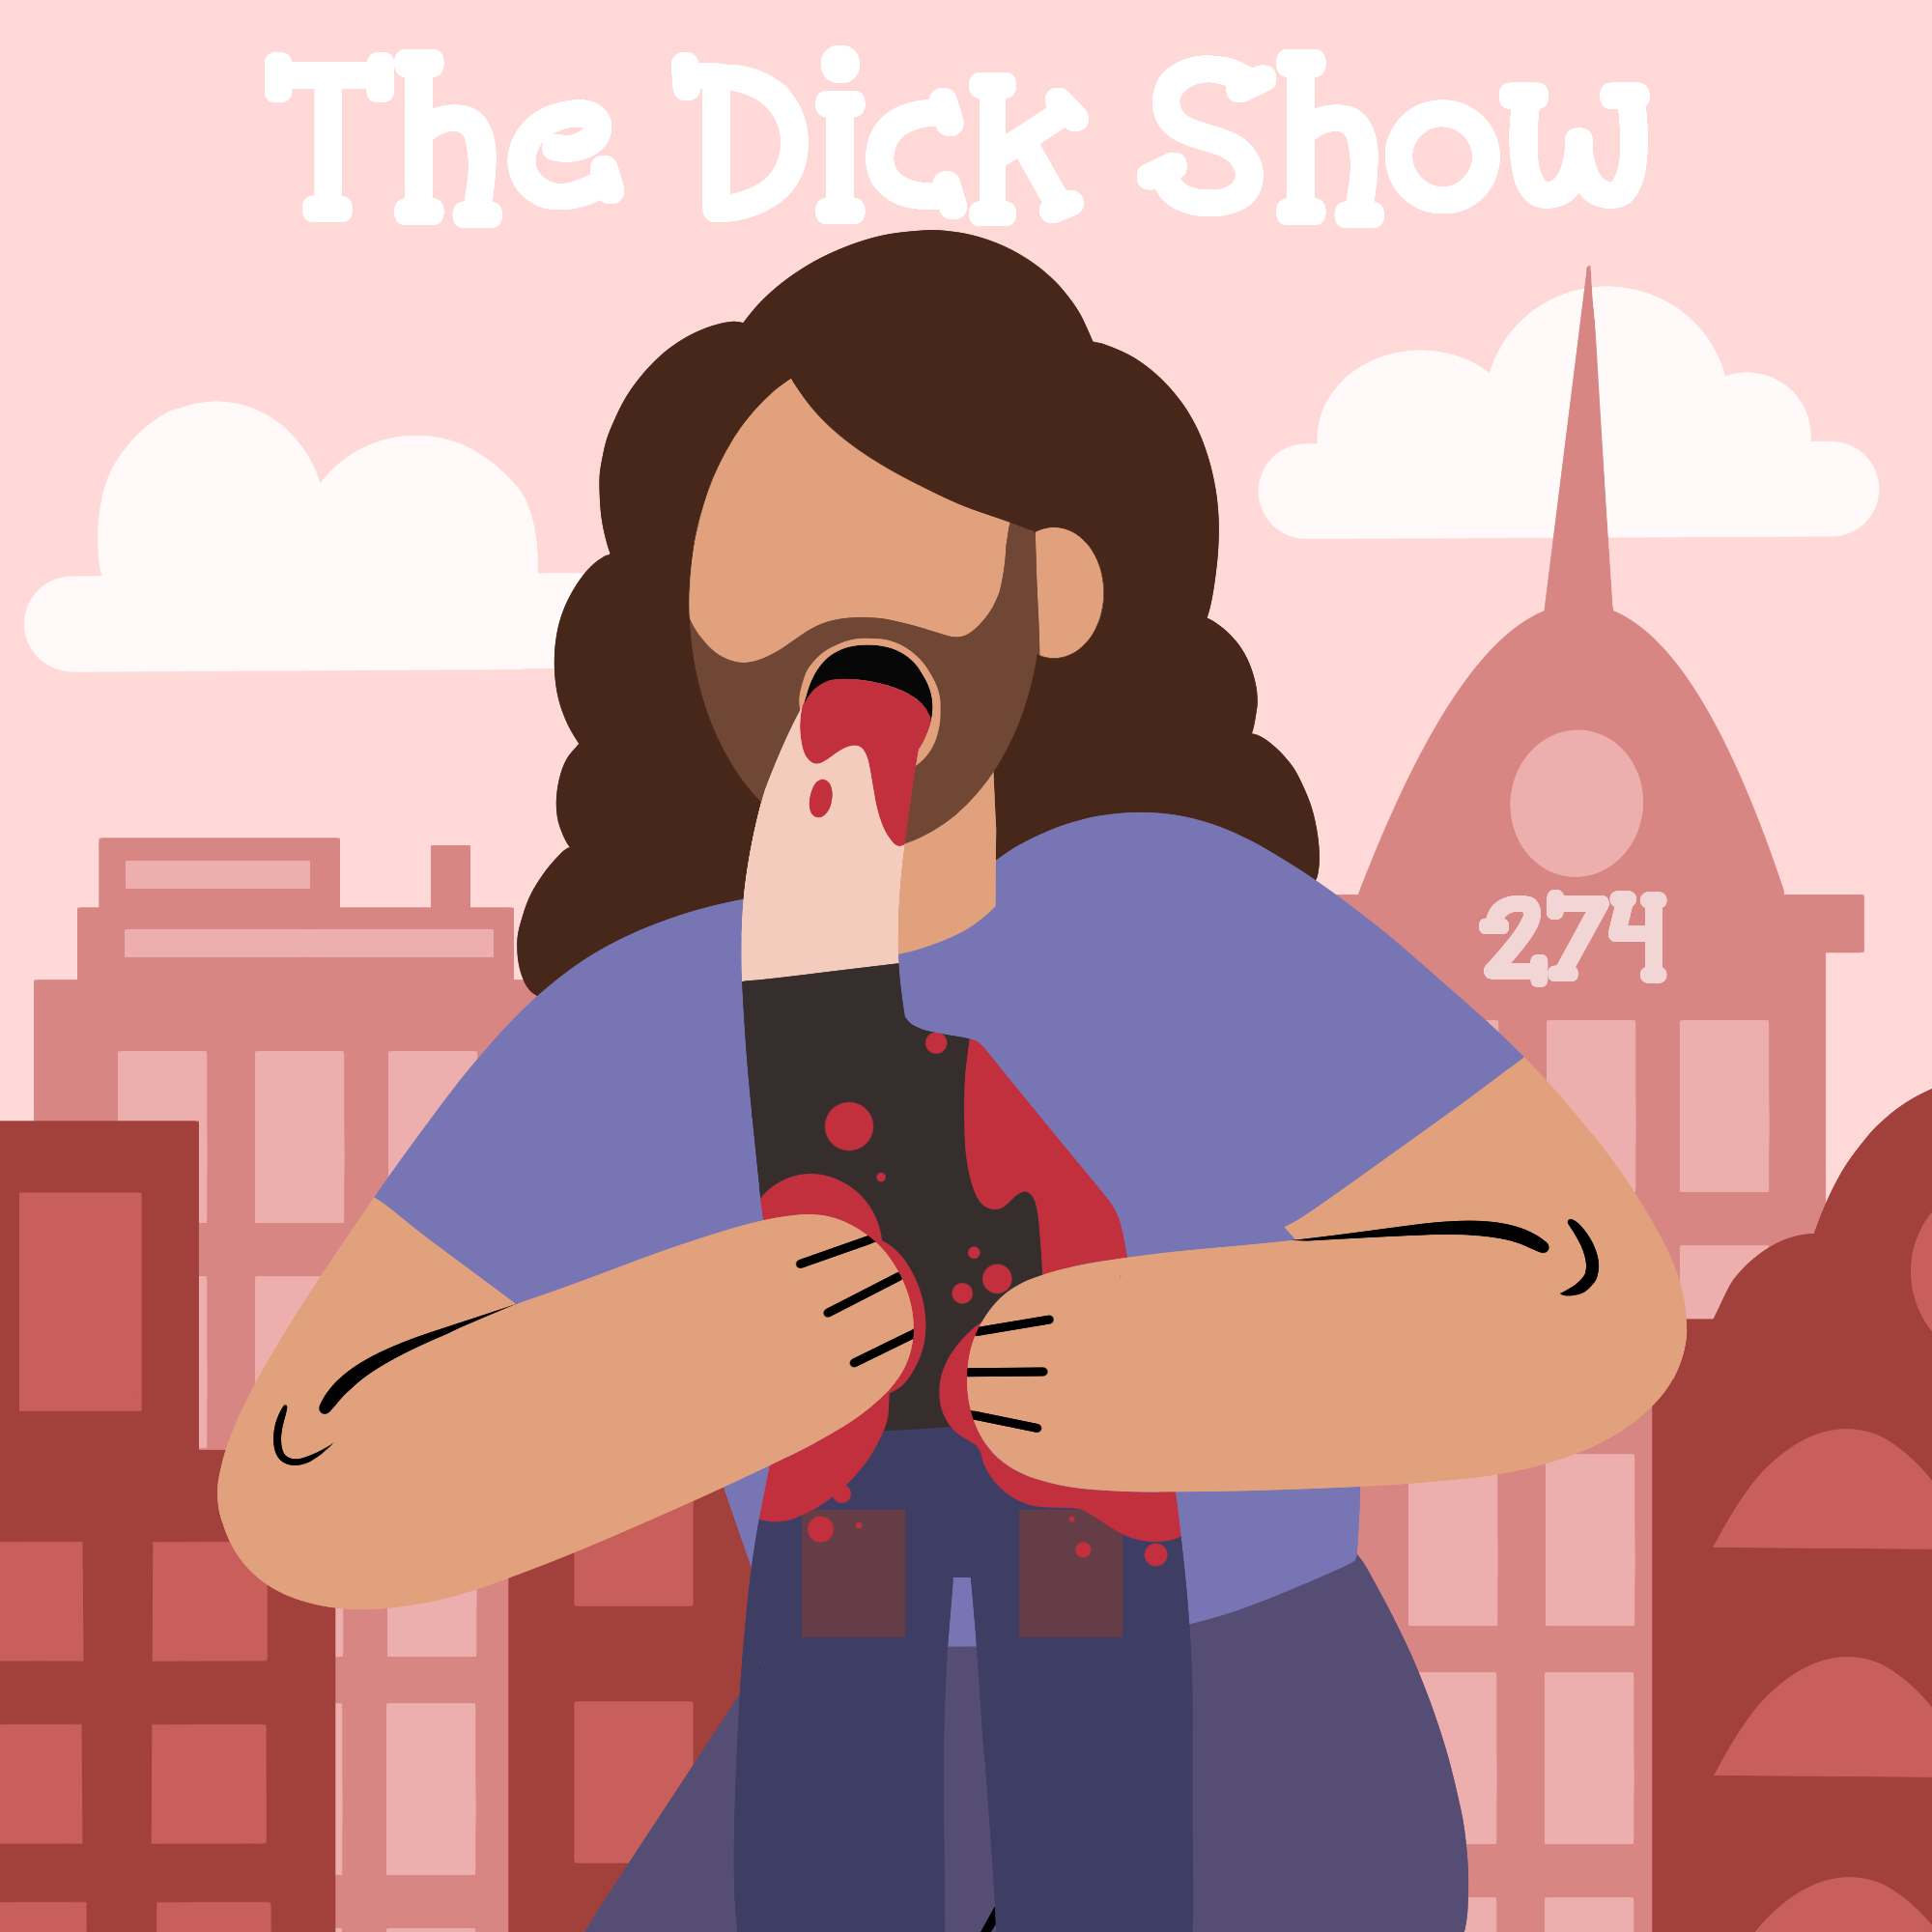 The dick show gun